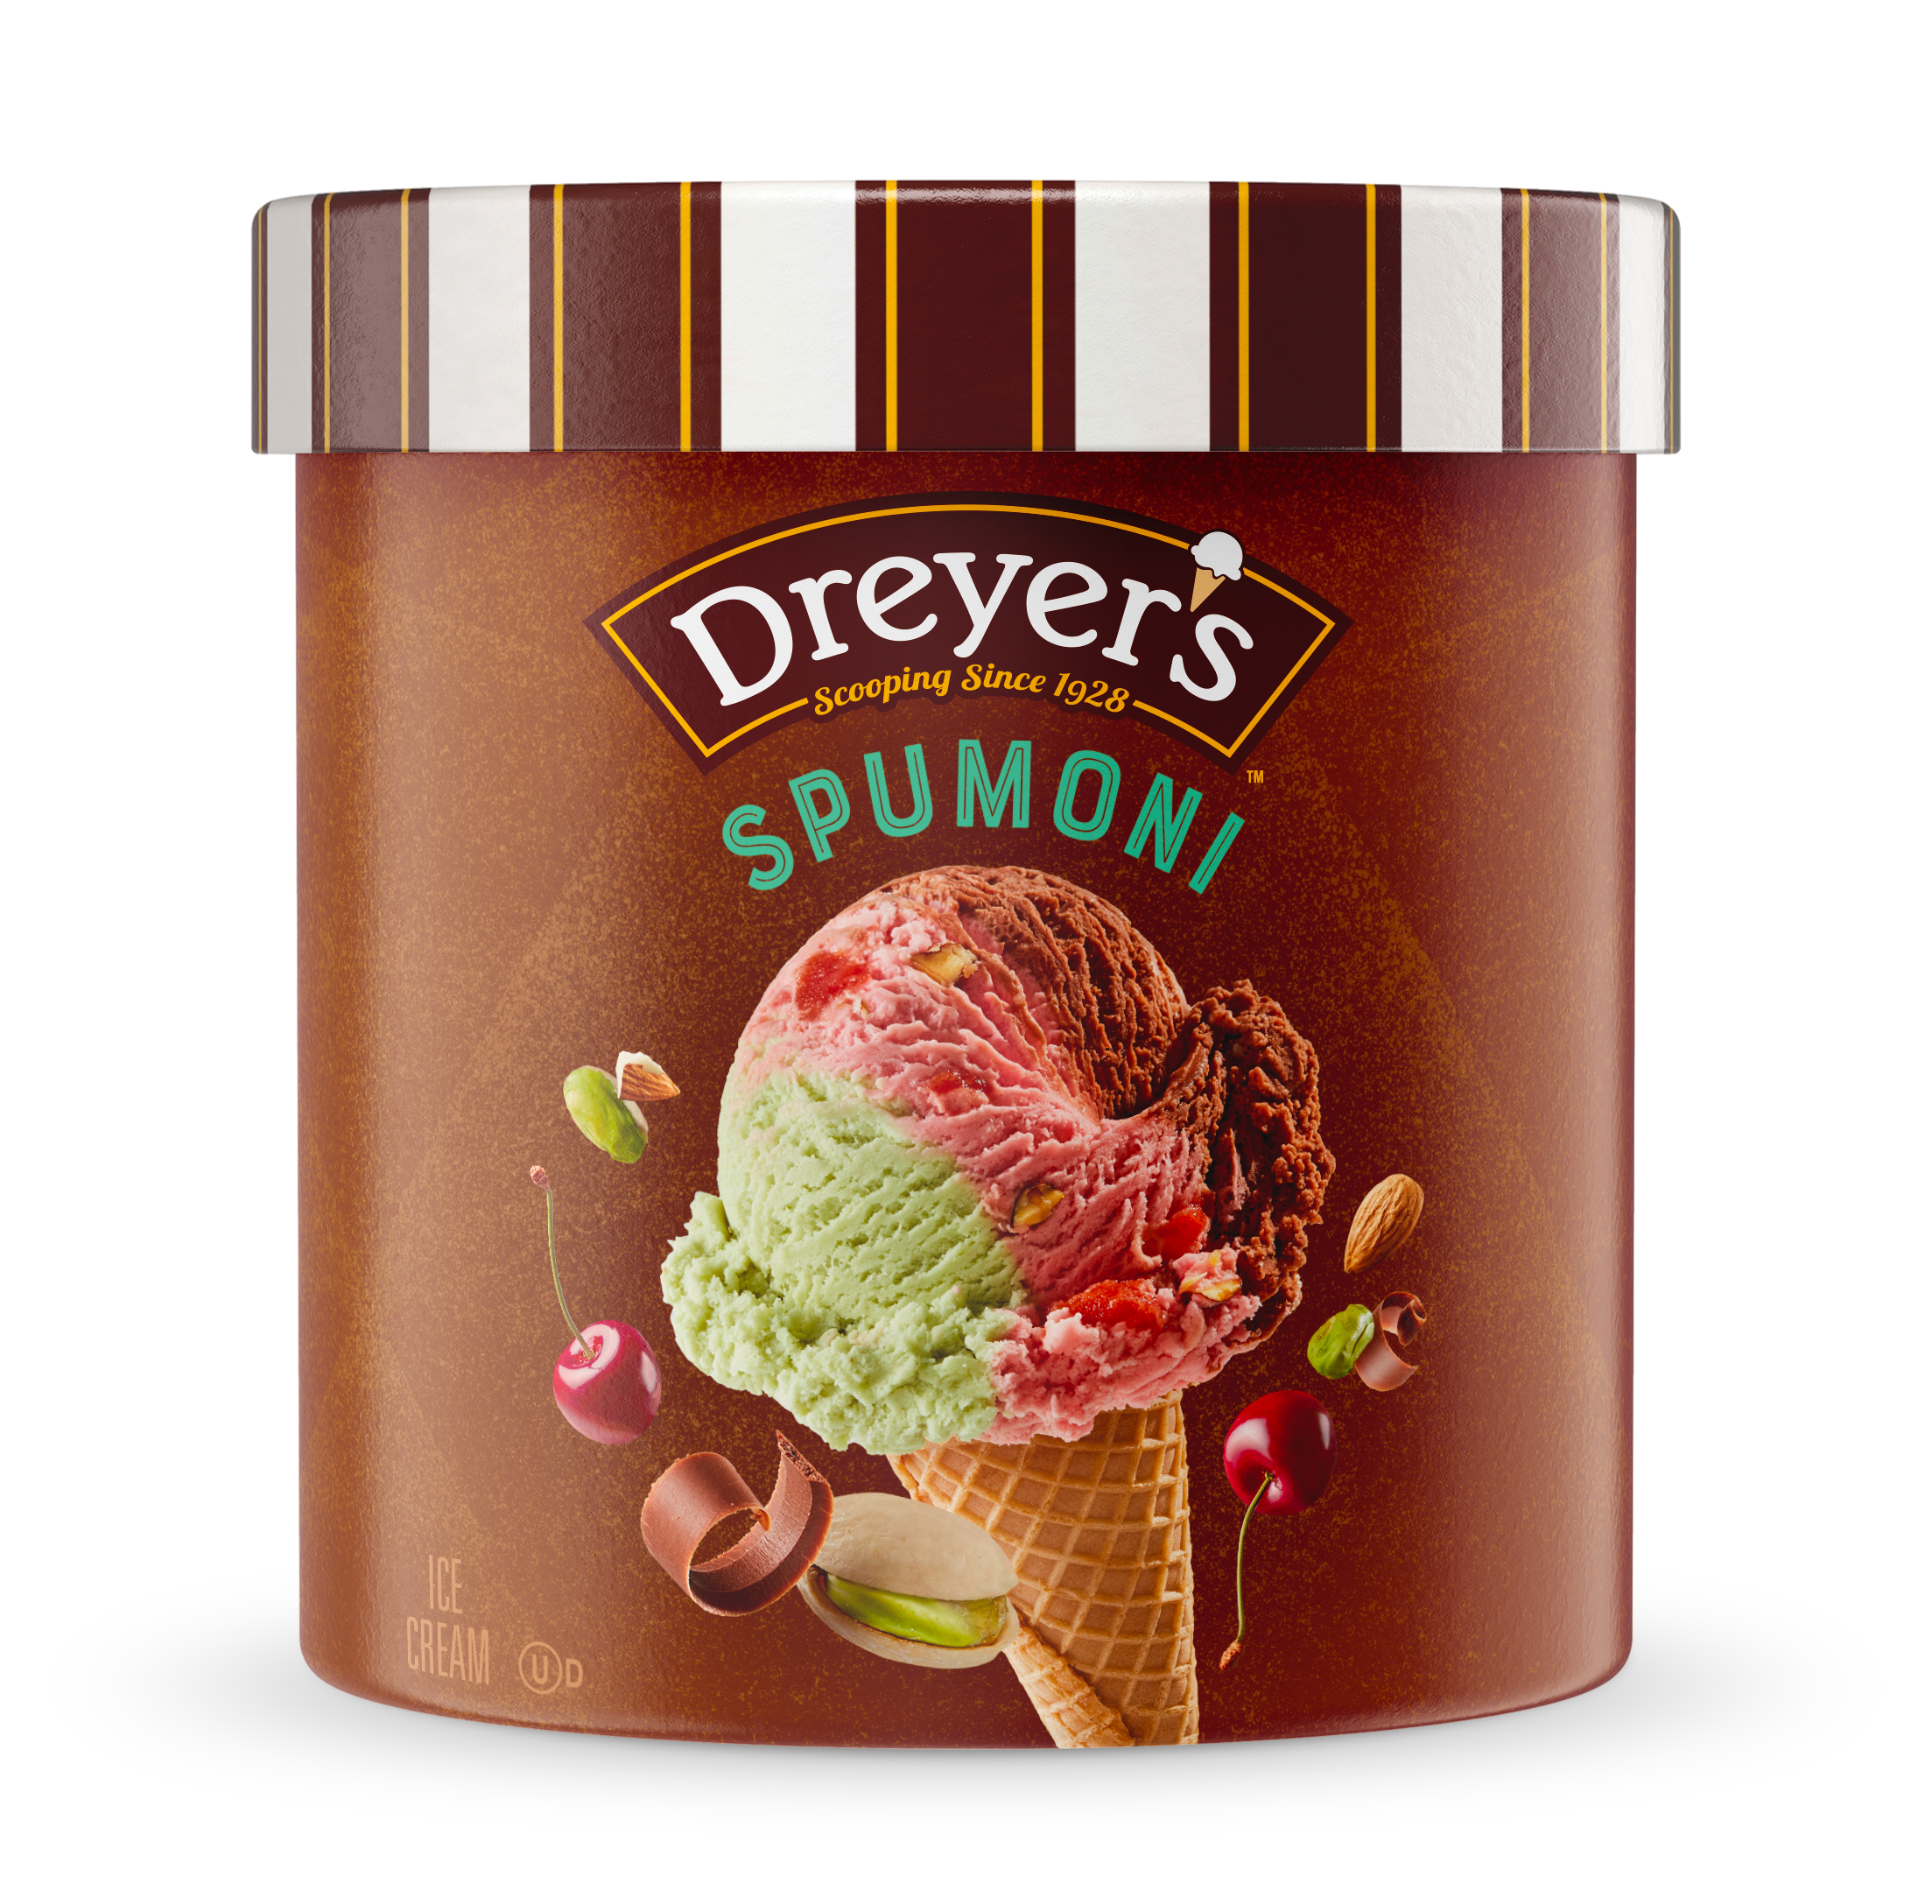 Carton of Dreyer's spumoni ice cream